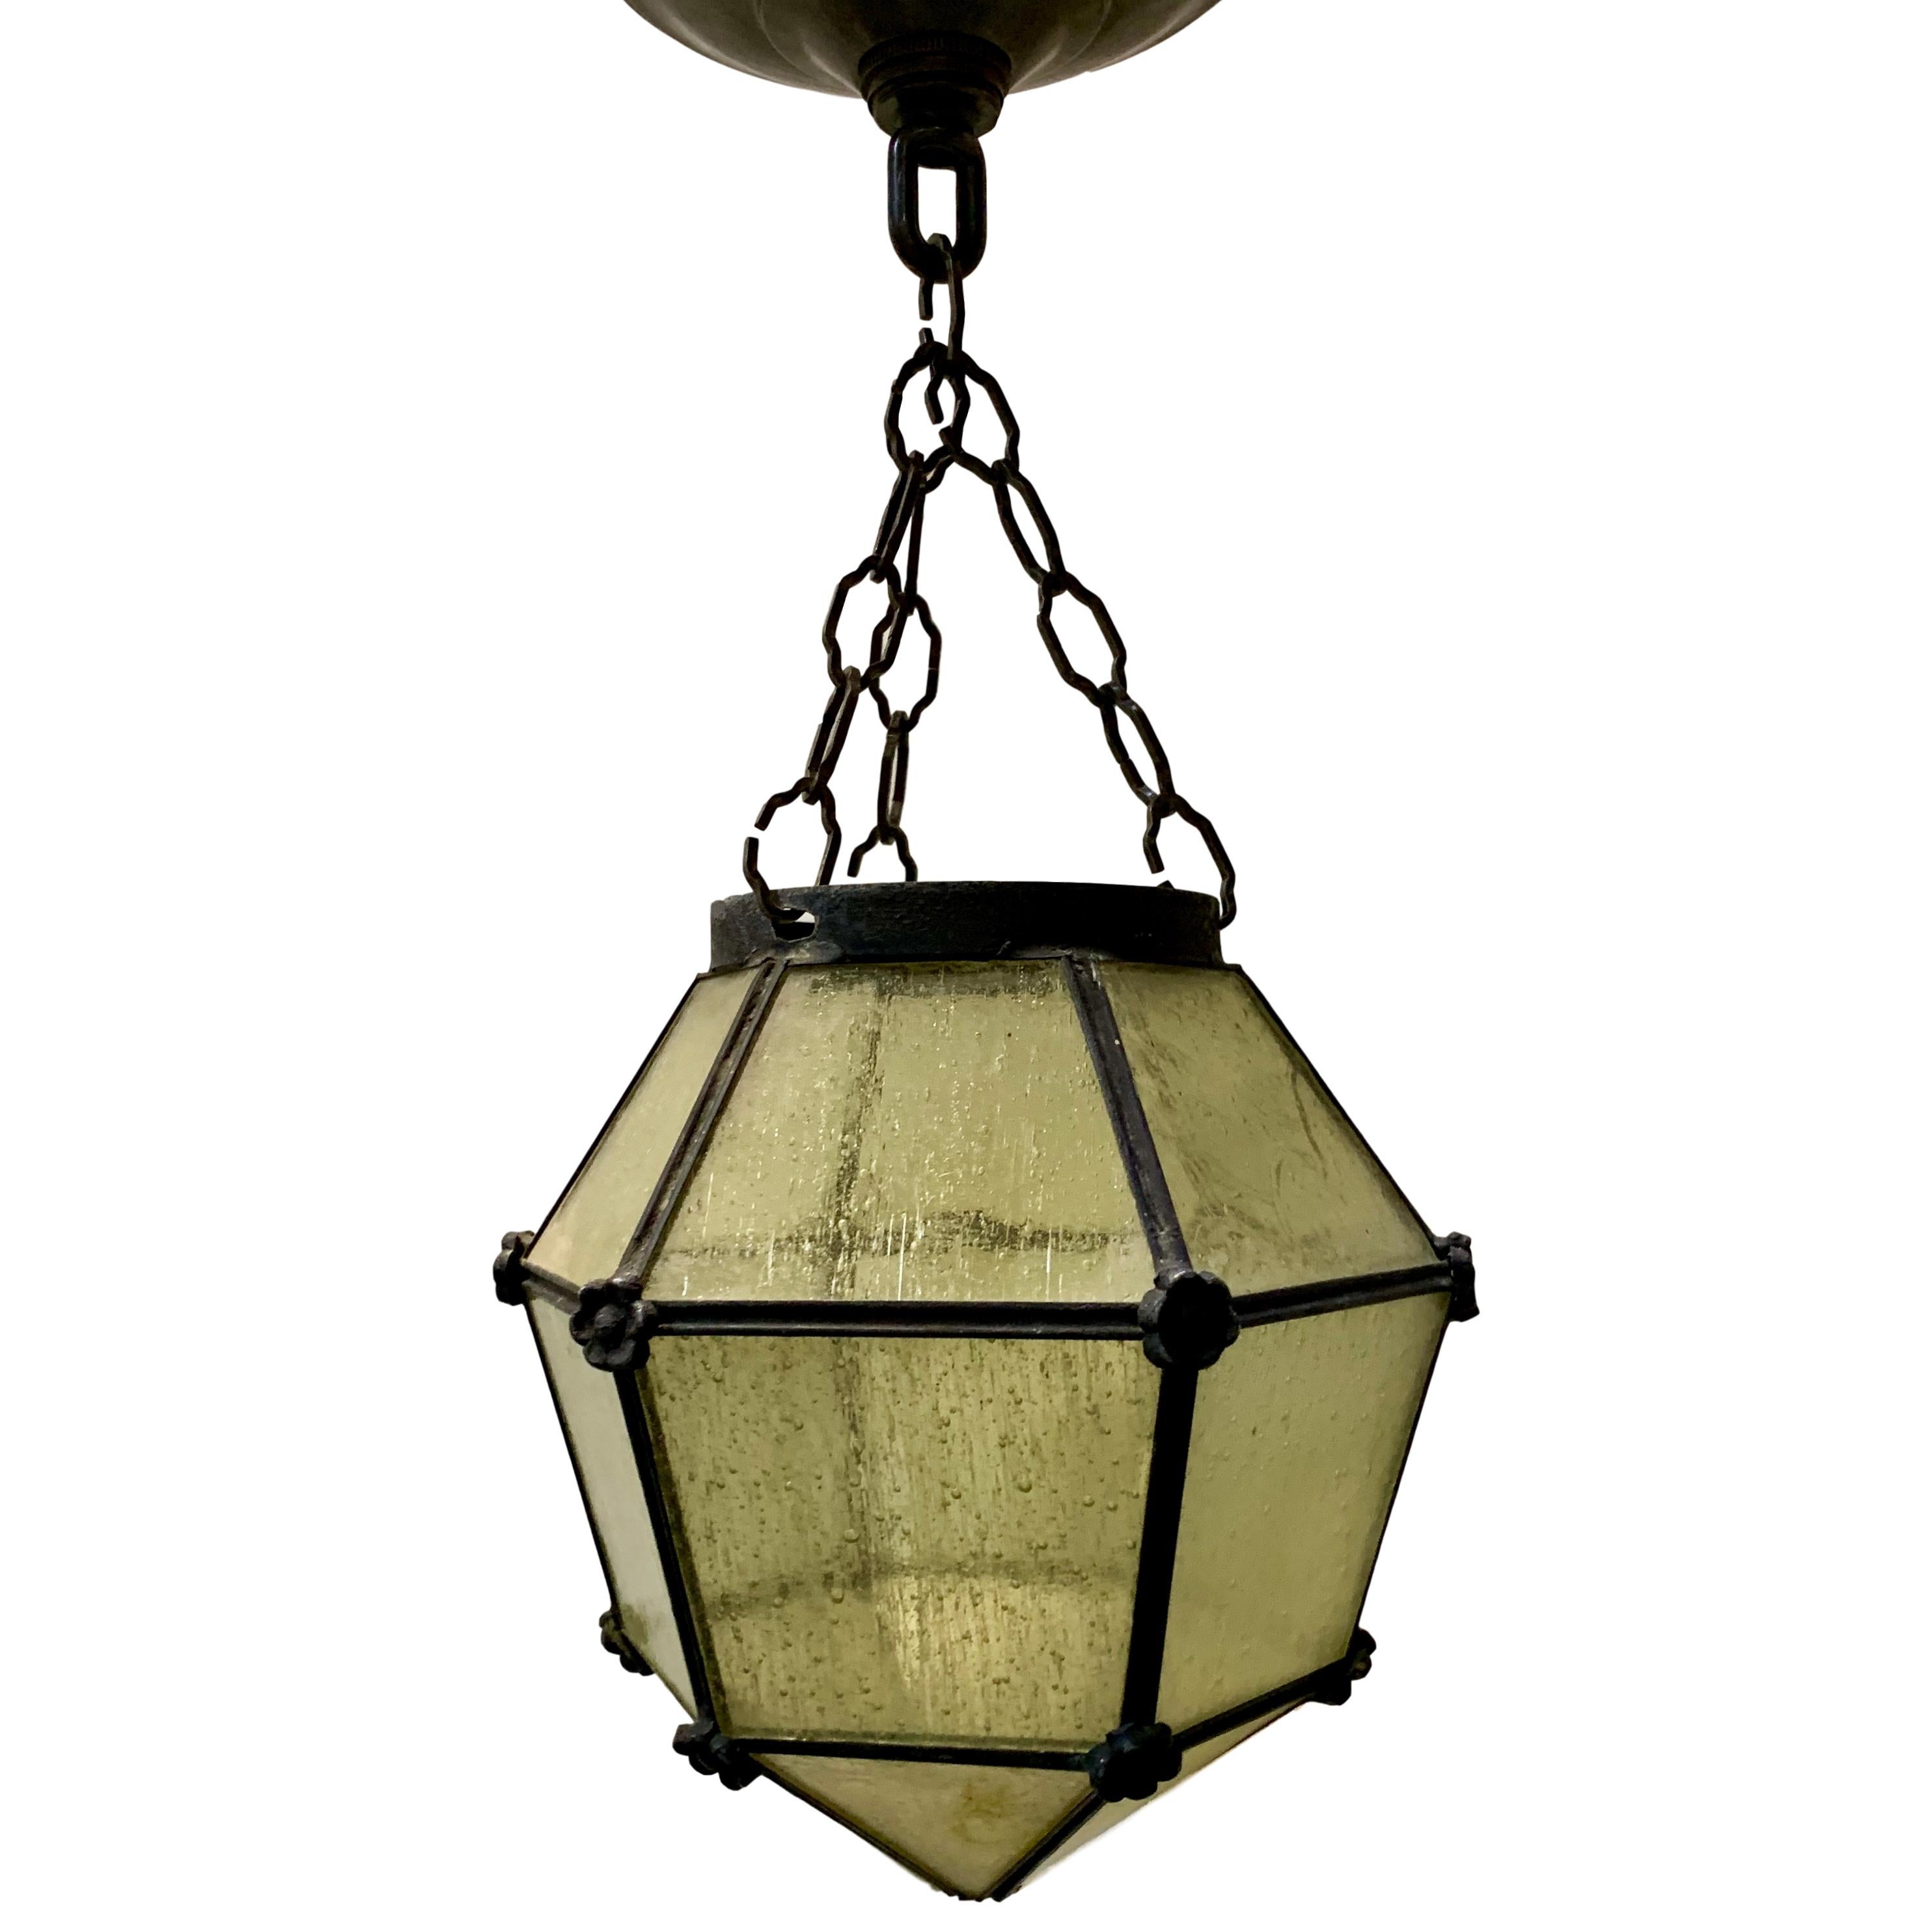 A English leaded glass panel lantern with original patina, circa 1900s.

Measurements:
Drop 12